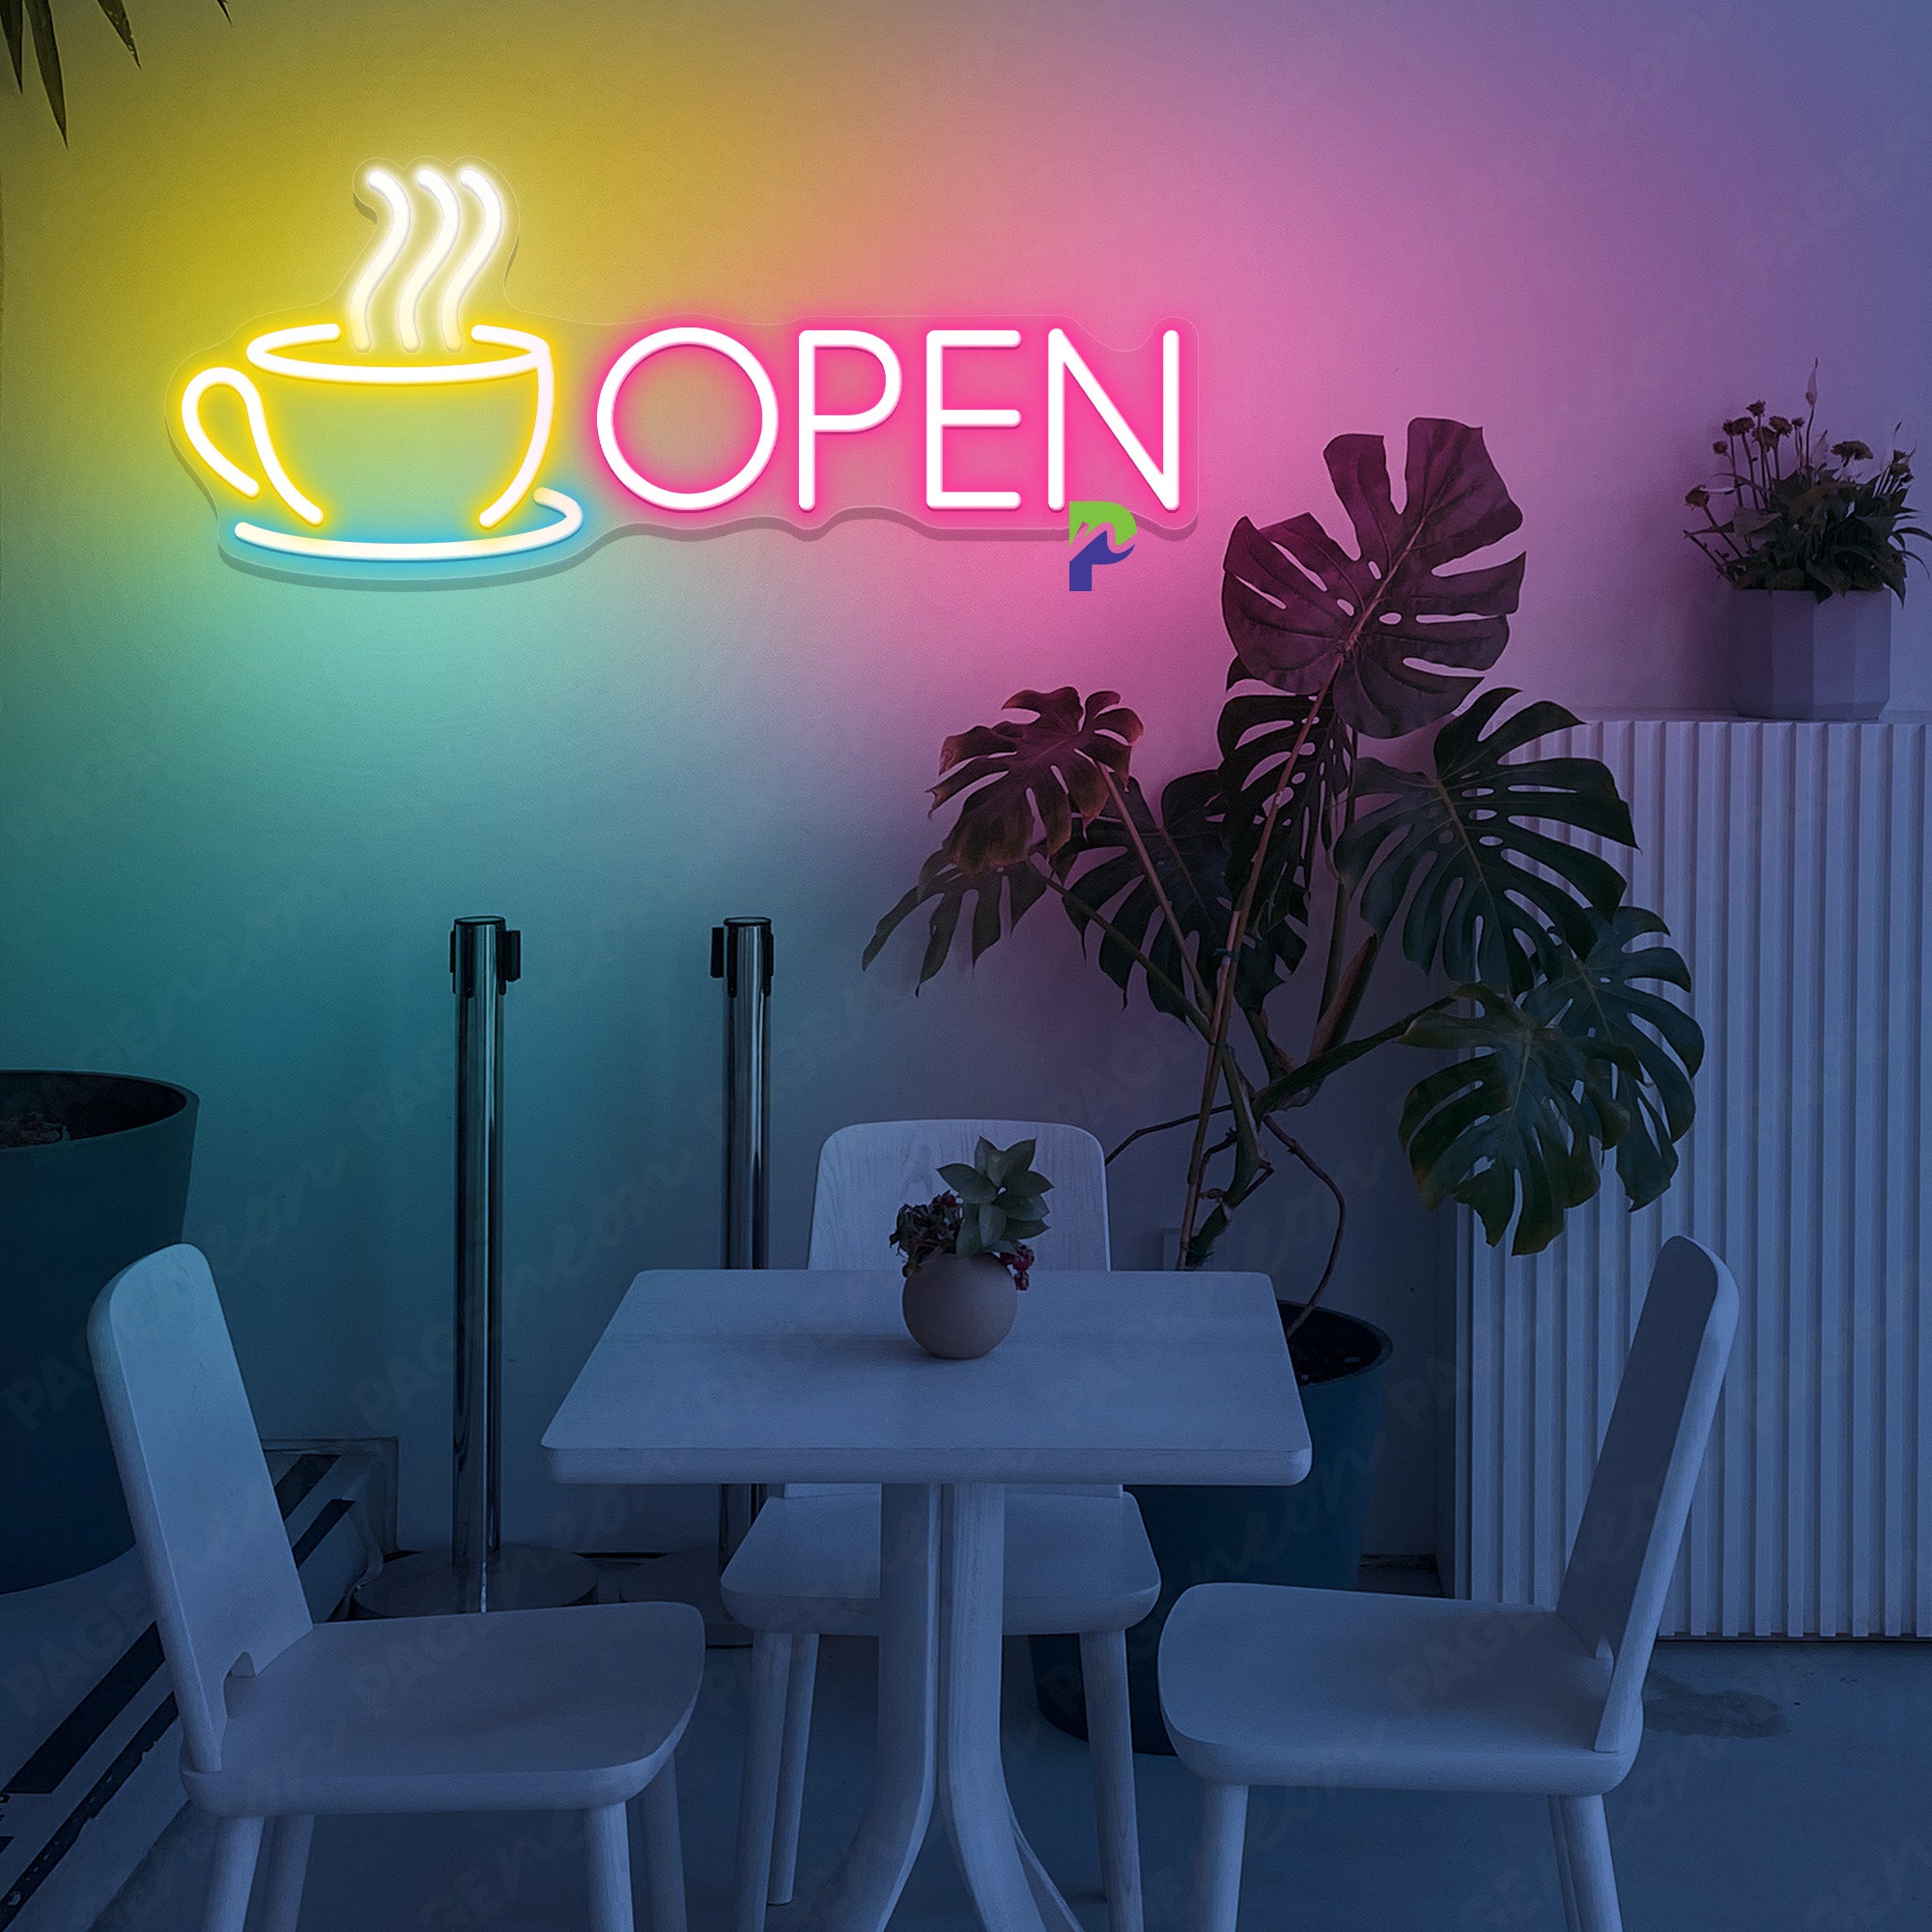 Cafe Open Neon Sign Led Light pink